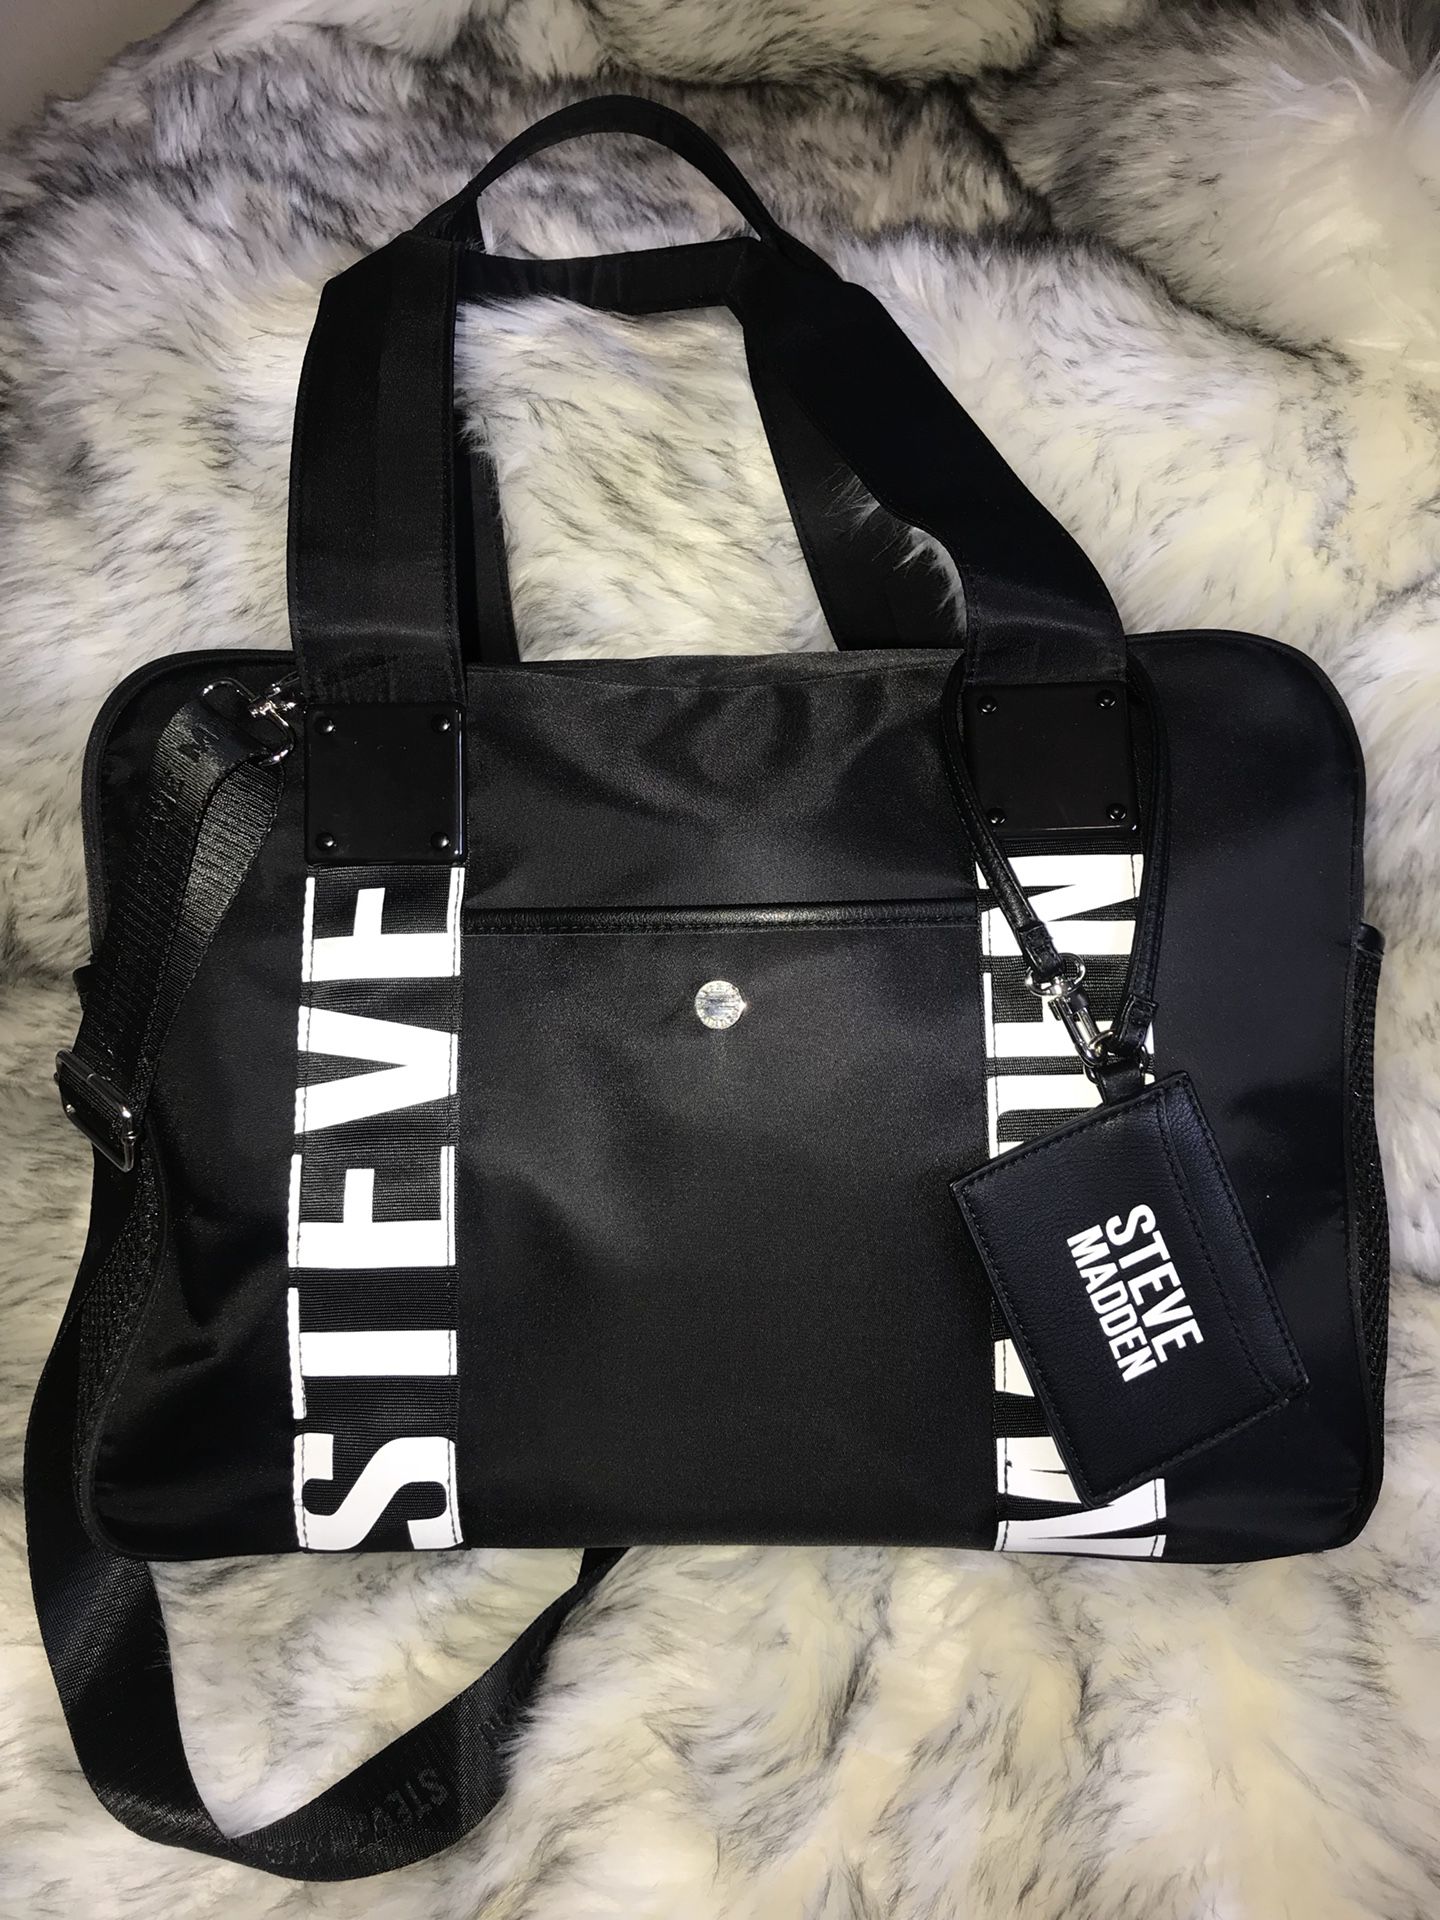 Steve Madden Large Black Purse/Tote Bag Nwt